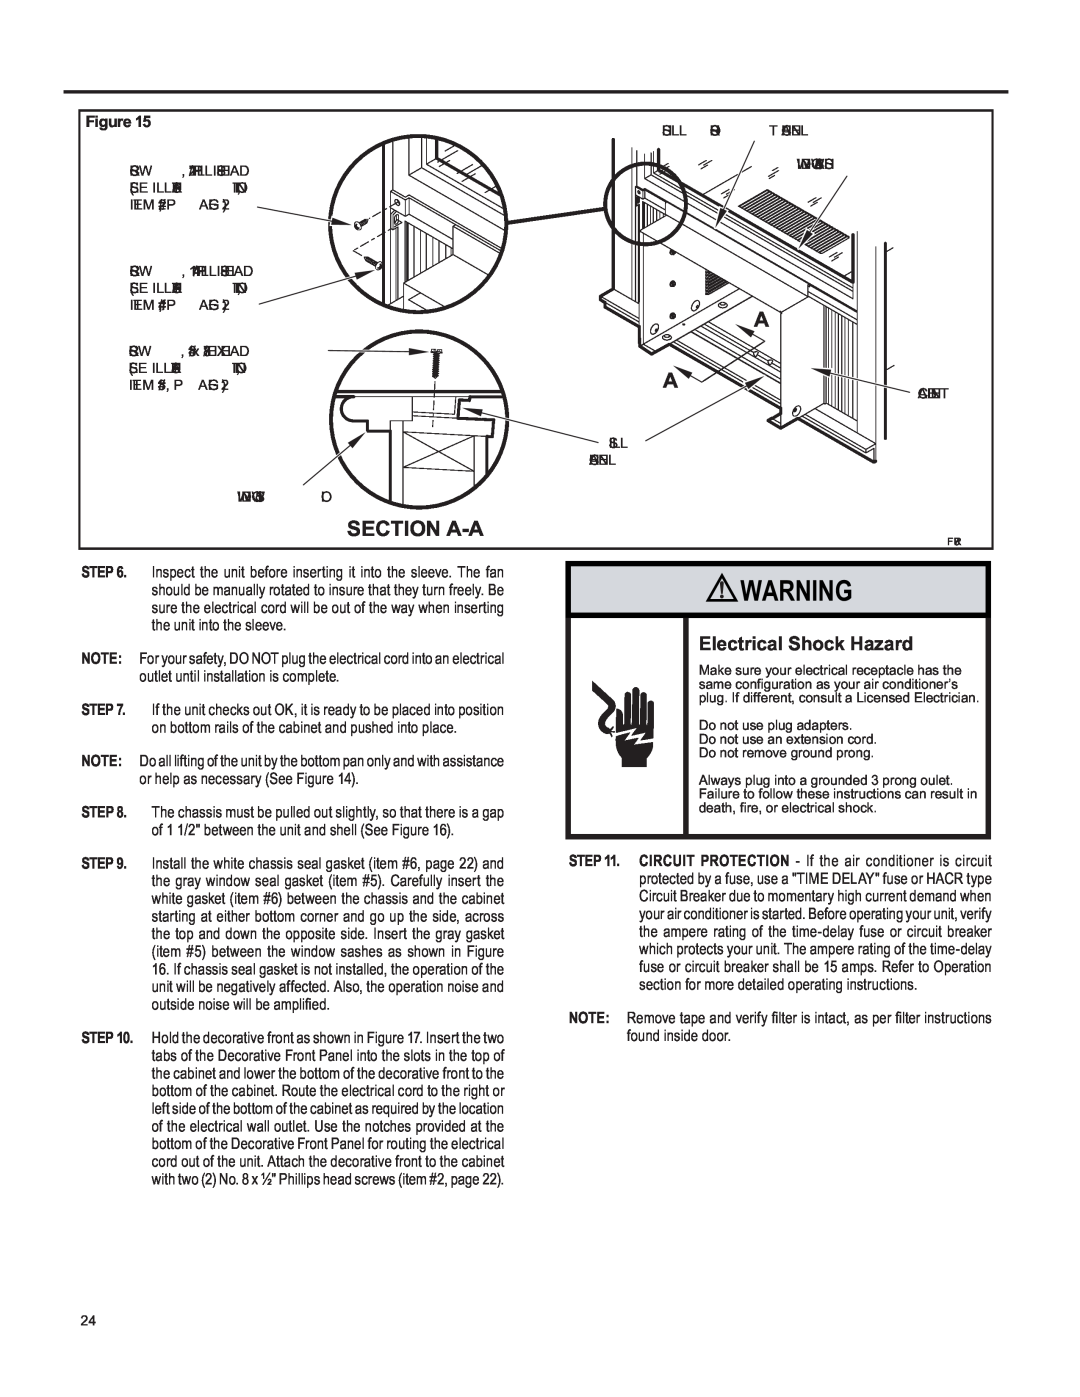 Friedrich SQ10, SQ06, SQ05, SQ08 operation manual Section A-A, Electrical Shock Hazard 